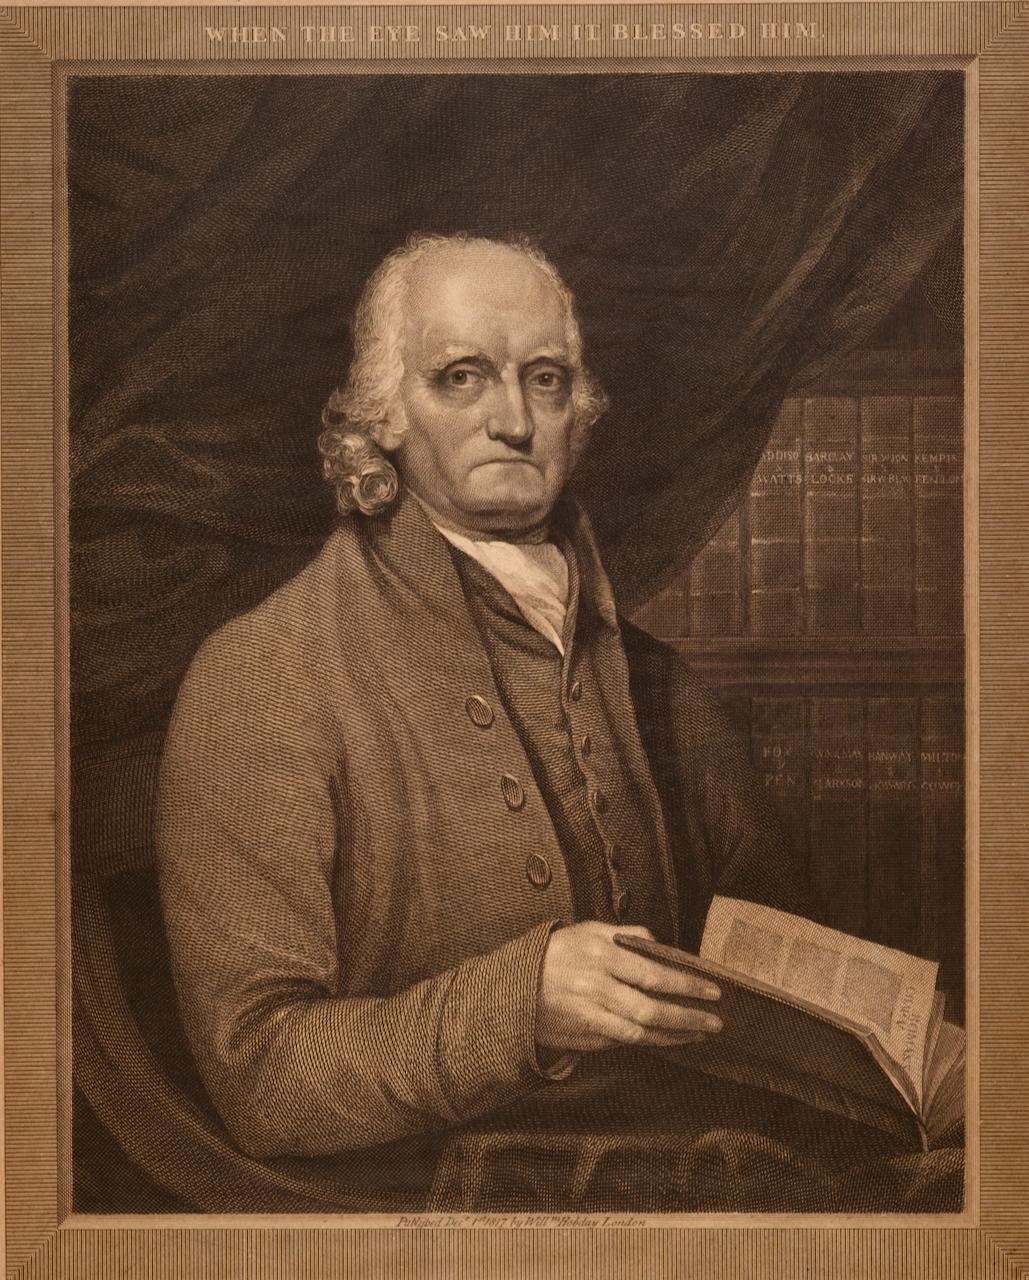 William Sharp Portrait Print - Richard Reynolds, Society of Friends: 19th C. Engraved Portrait by Wm. Sharp